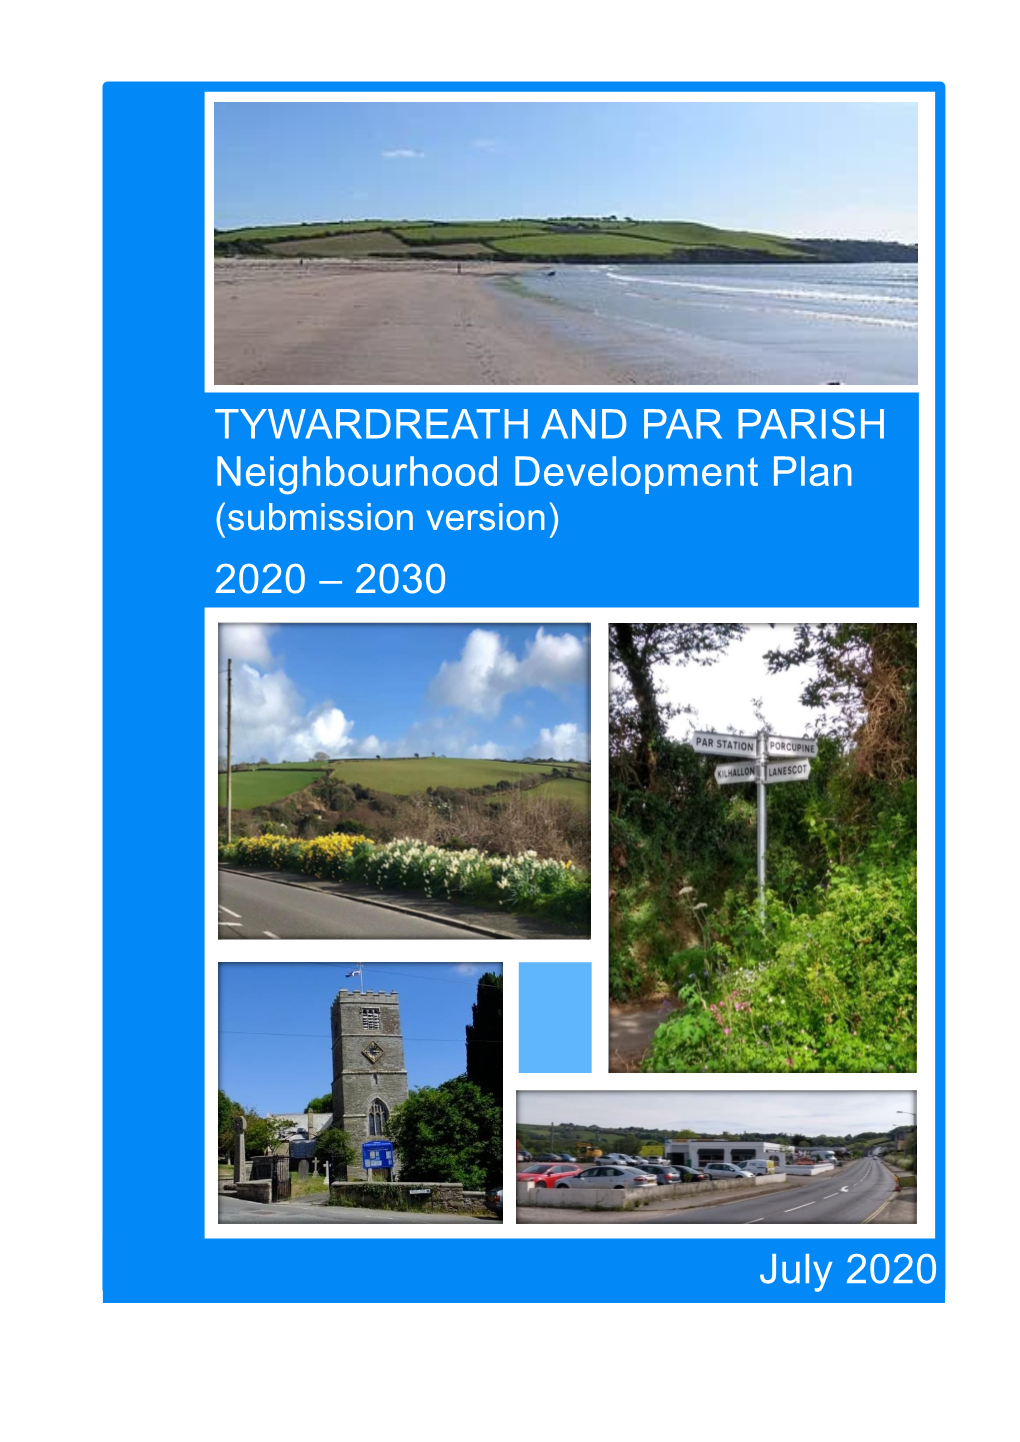 TYWARDREATH and PAR PARISH Neighbourhood Development Plan (Submission Version)